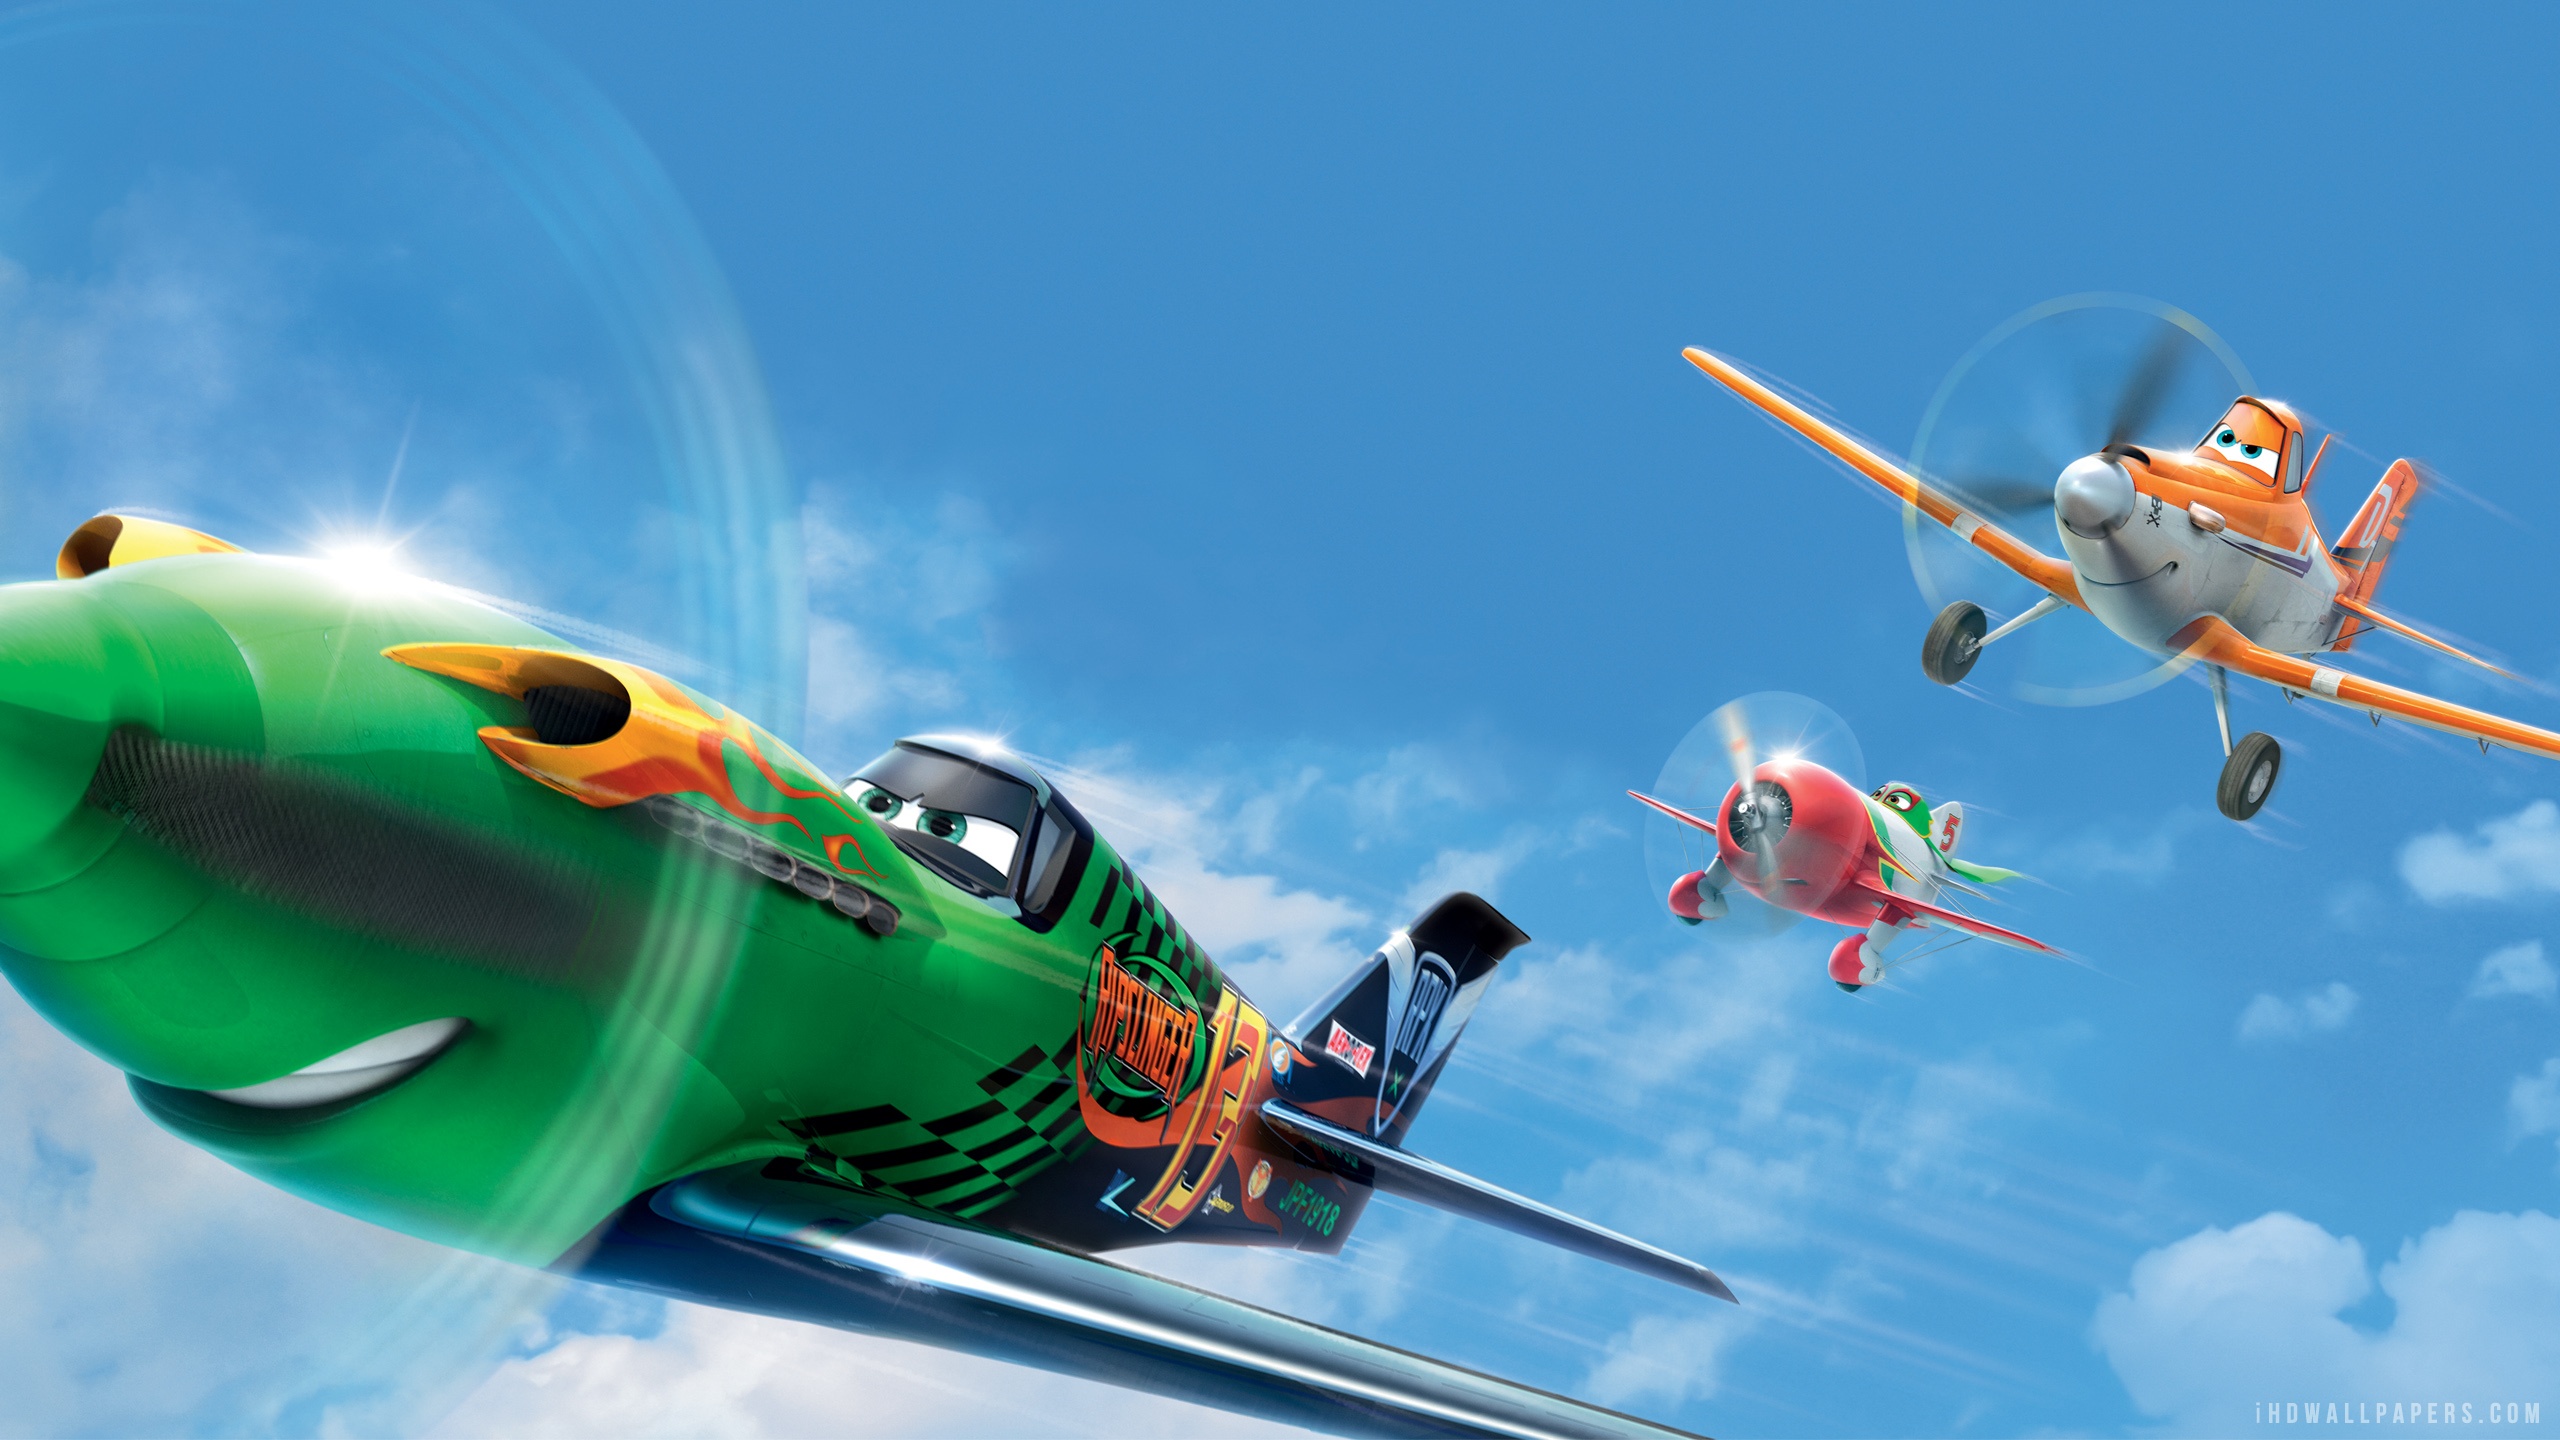 Disney Planes Movie HD Wallpaper   iHD Wallpapers 2560x1440